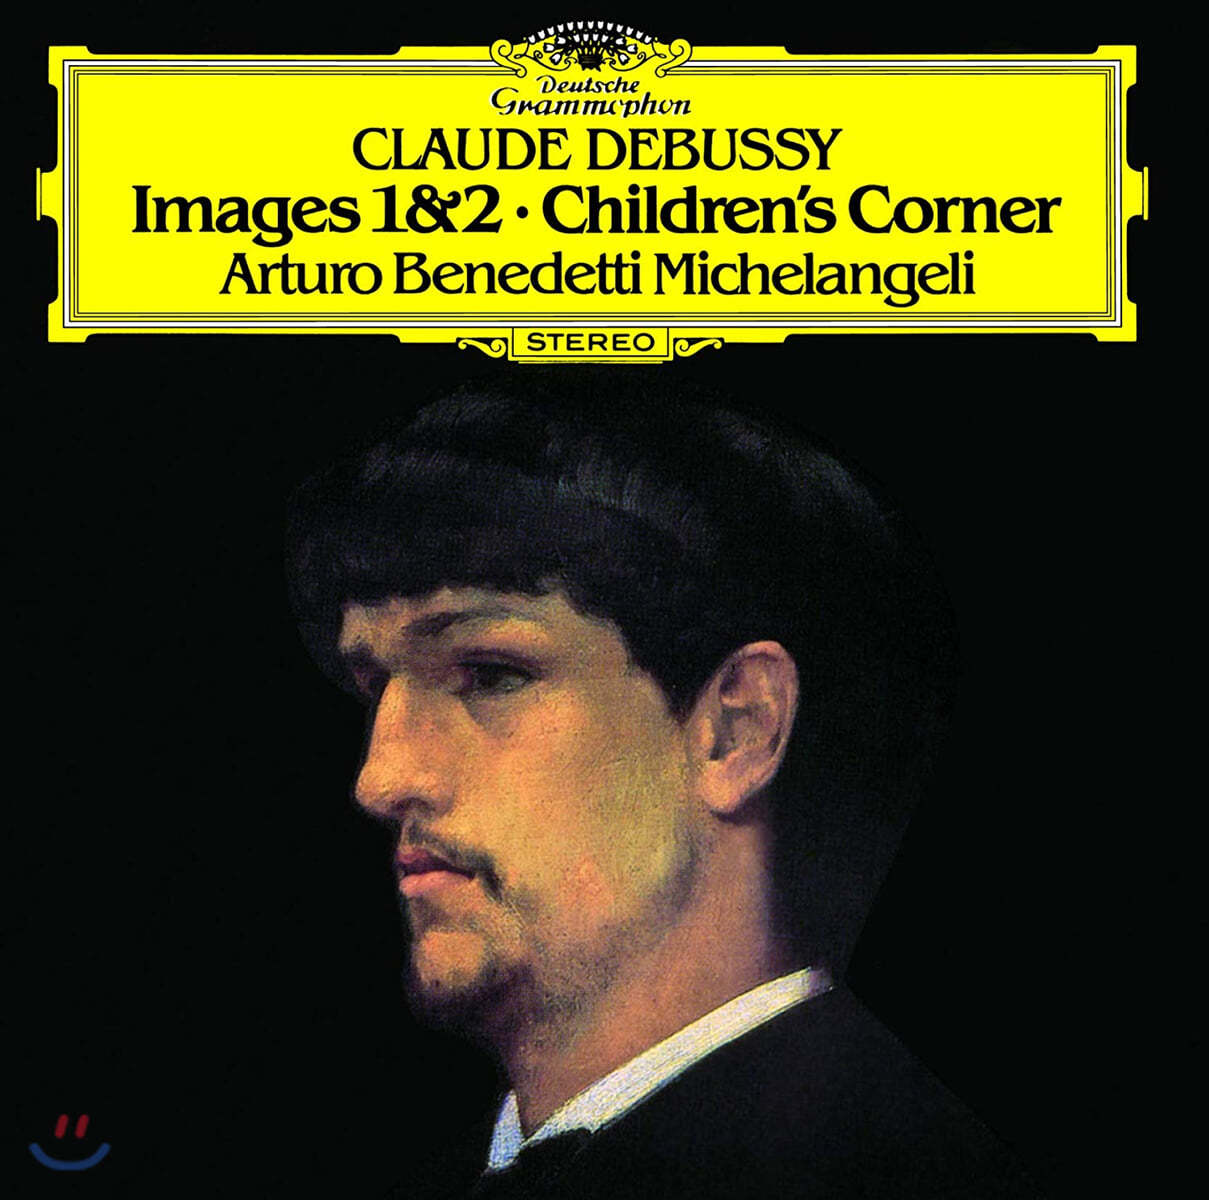 Arturo Benedetti Michelangeli 드뷔시: 영상 1, 2집, 모음곡 '어린이의 차지' (Debussy: Images 1, 2, Children's Corner)